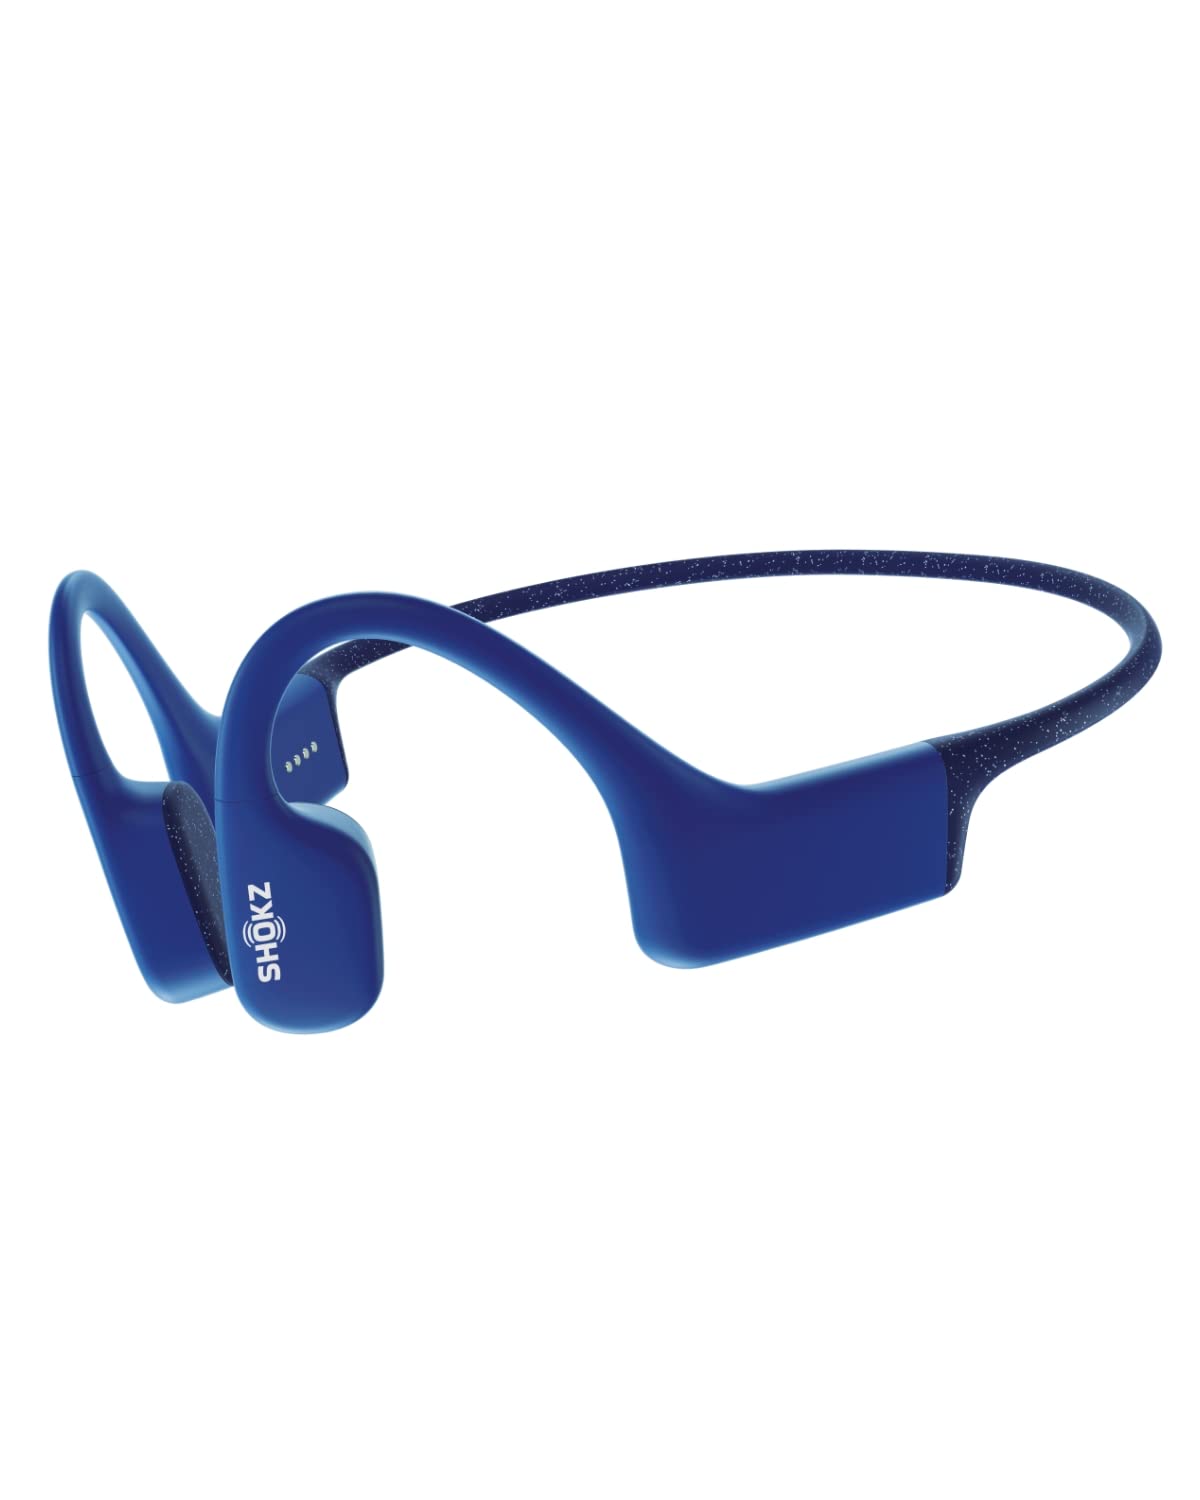 SHOKZ OpenSwim - 수영용 골전도 MP3 방수 헤드폰 - 노즈 클립과 귀마개가 있는 개방형 무선 헤드폰(파란색)